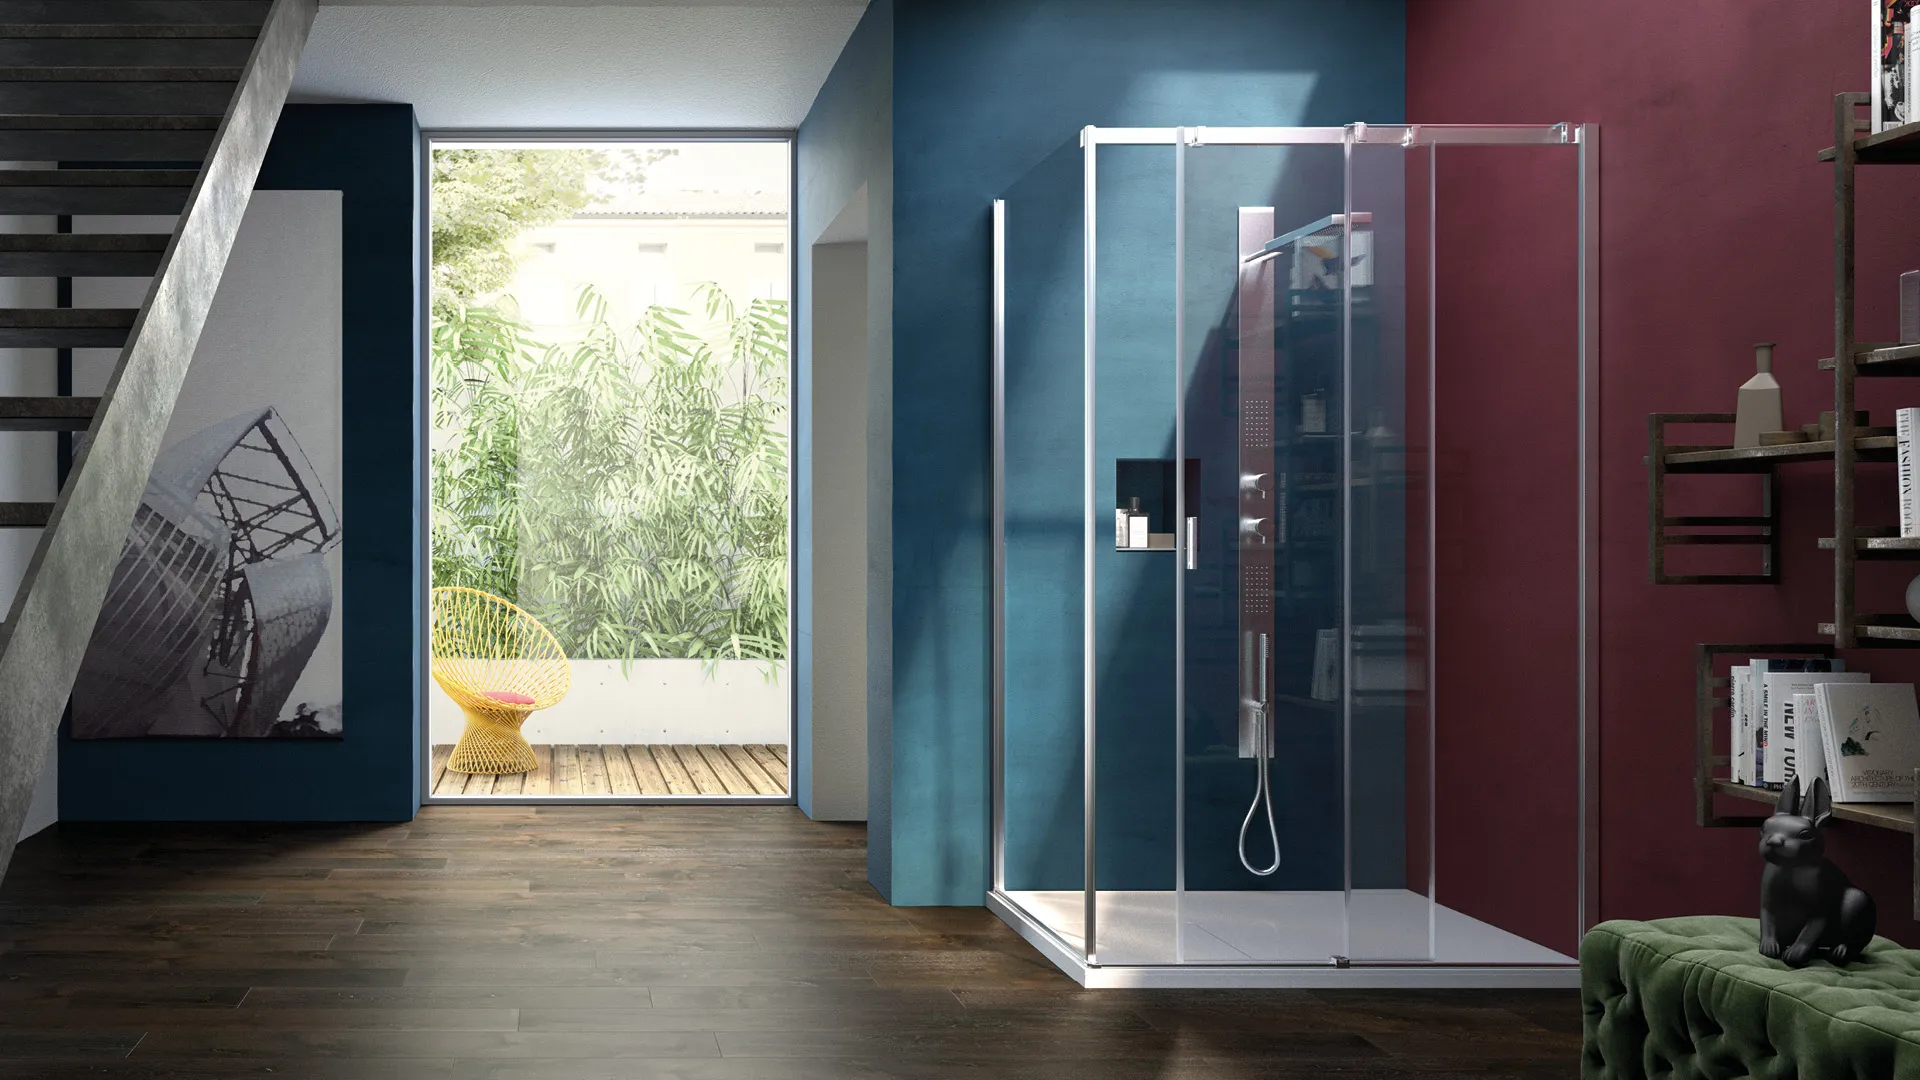 Vismaravetro - sliding shower enclosure - Serie 8000 collection